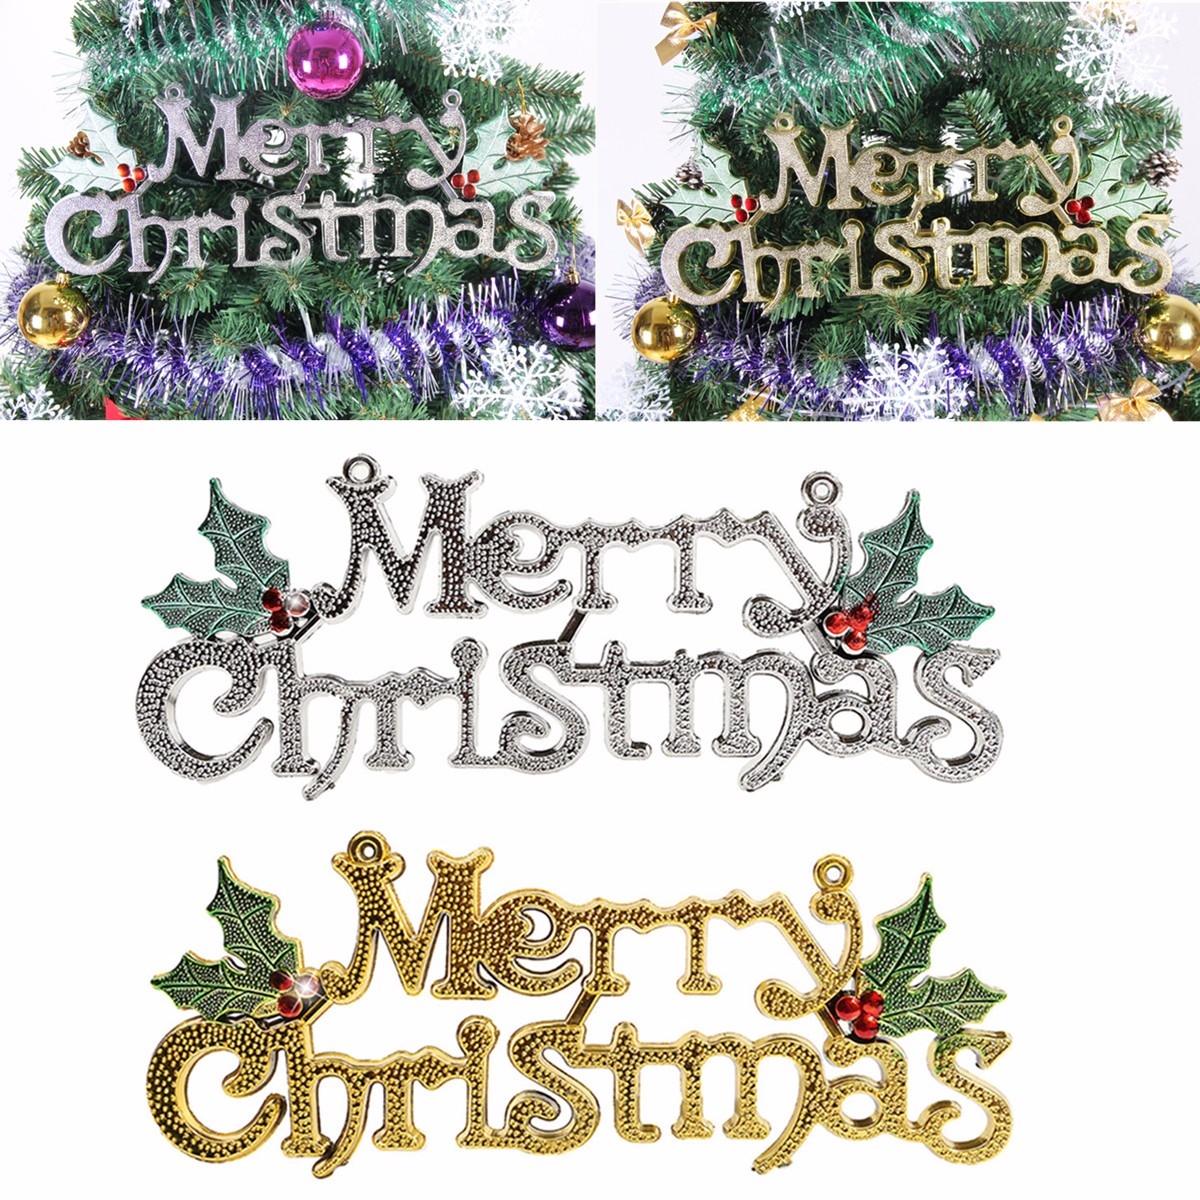 Merry Christmas Words Ornament Pendant Wall Door Xmas Tree Hanging Decoration